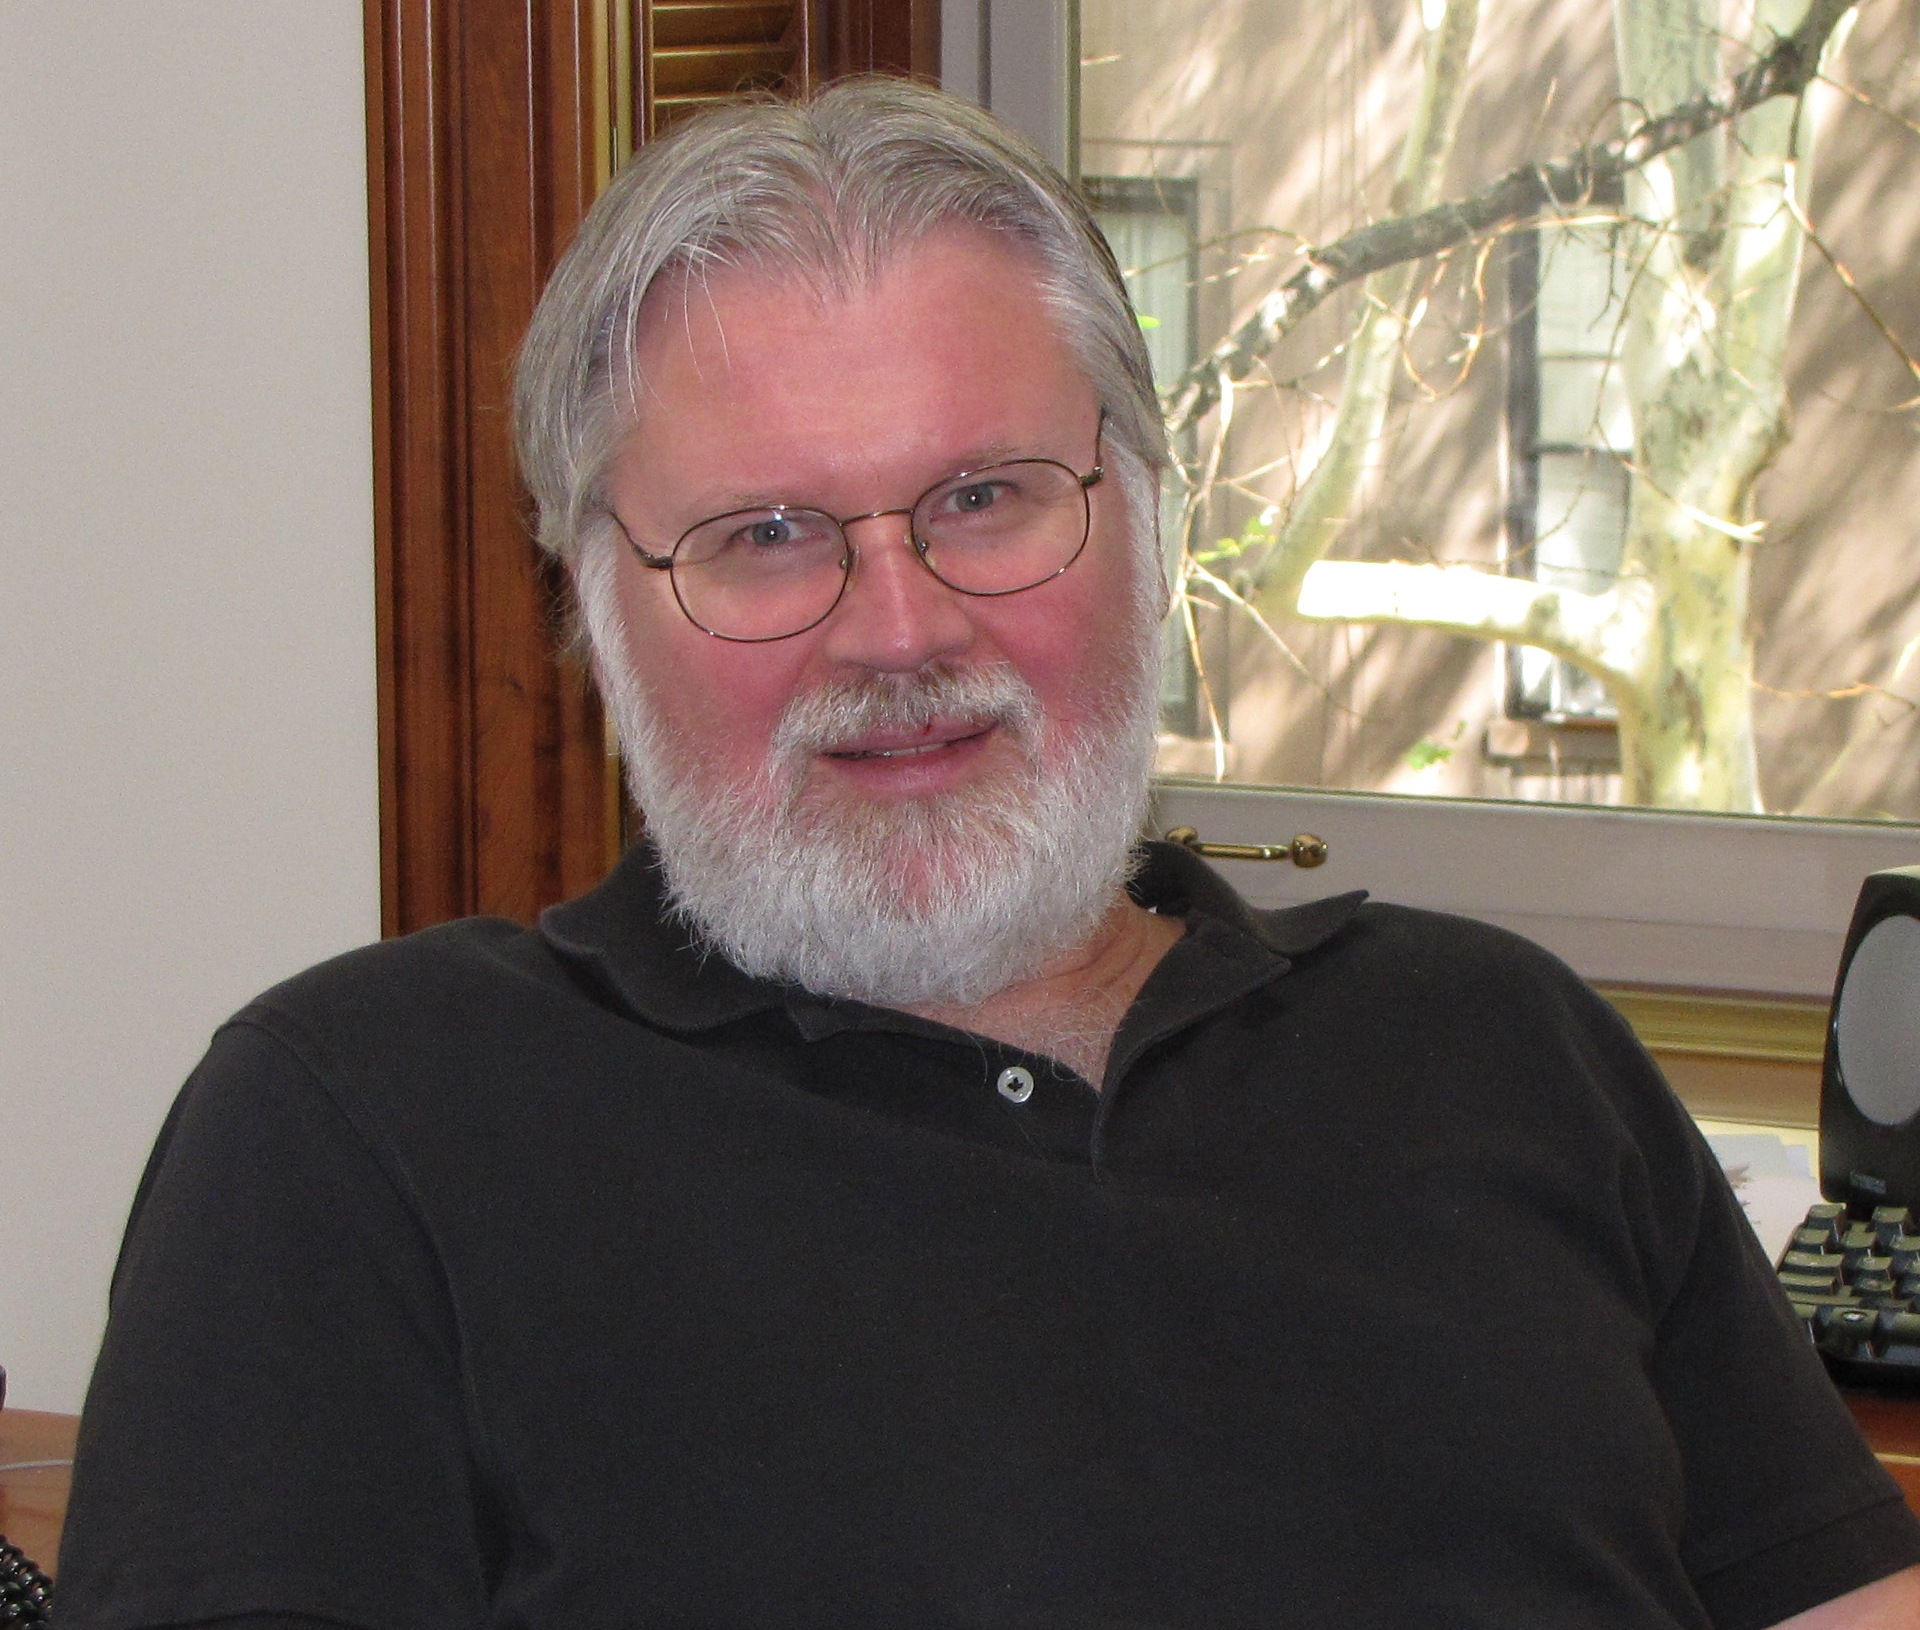 Photo of Douglas Massey with grey hair, beard, glasses, and black shirt.